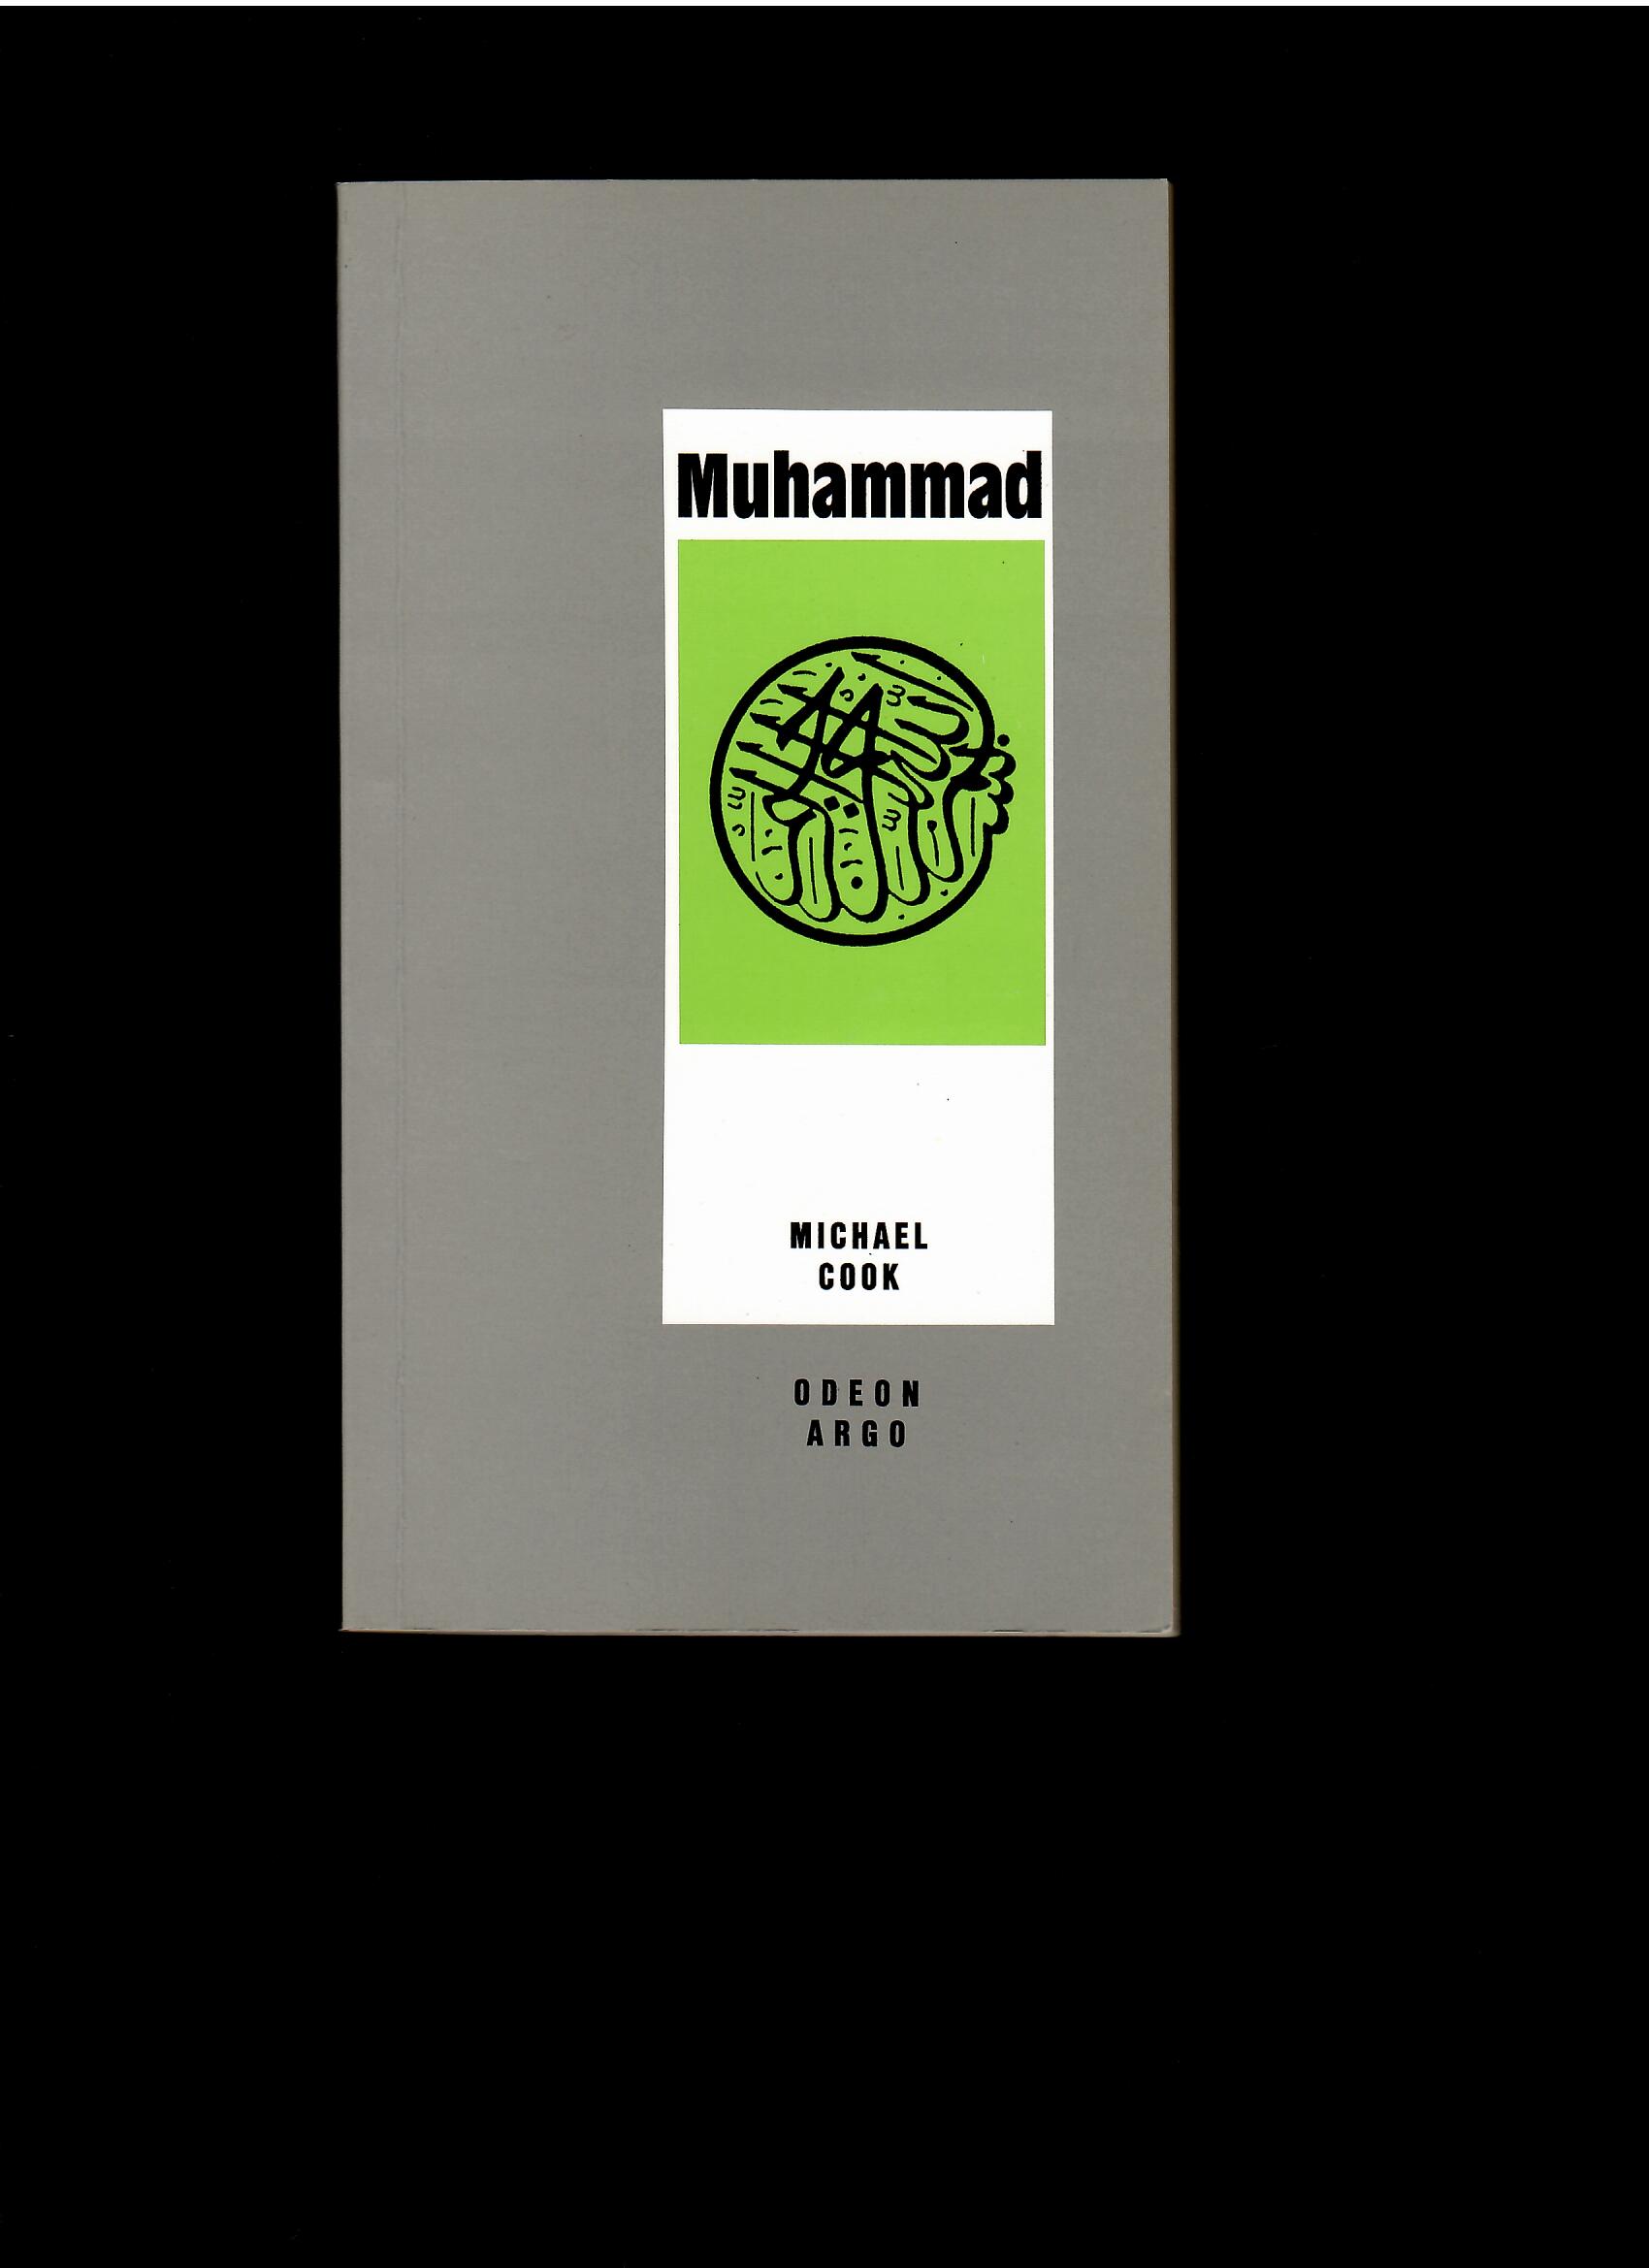 Michael Cook: Muhammad /Mohamed/